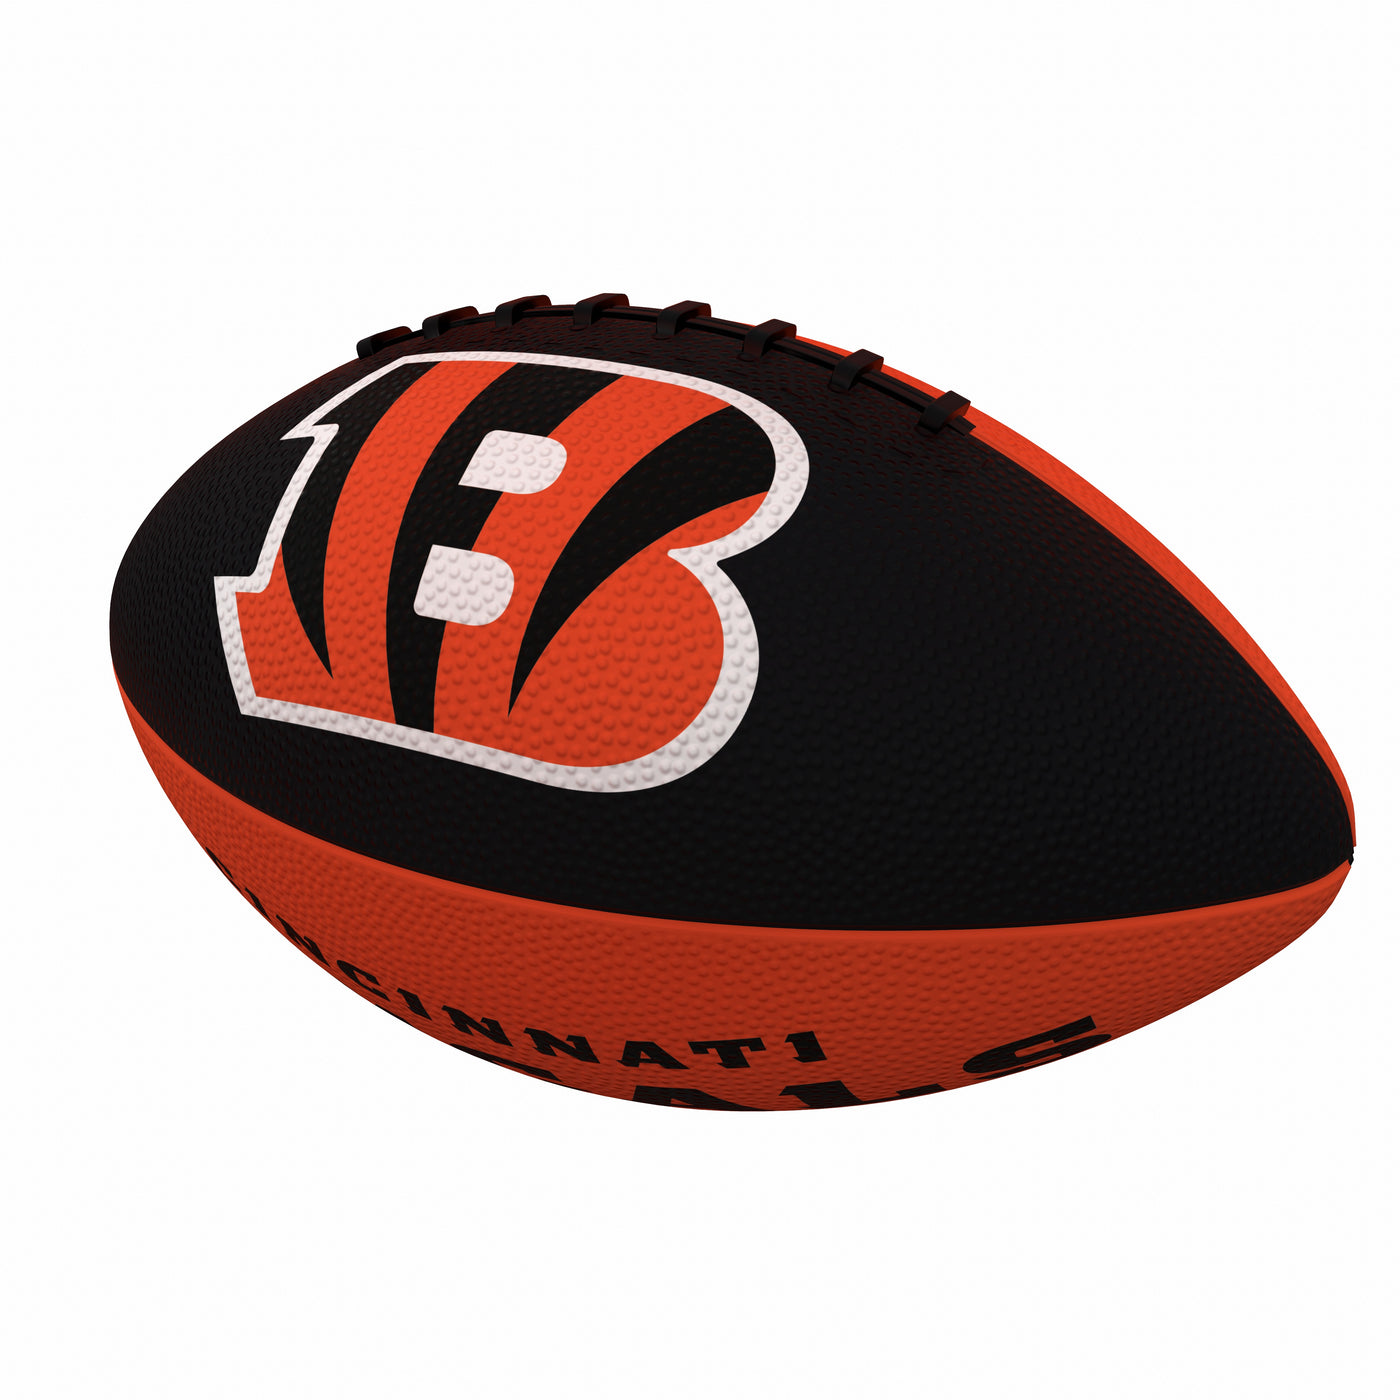 Cincinnati Bengals Pinwheel Logo Junior-Size Rubber Football